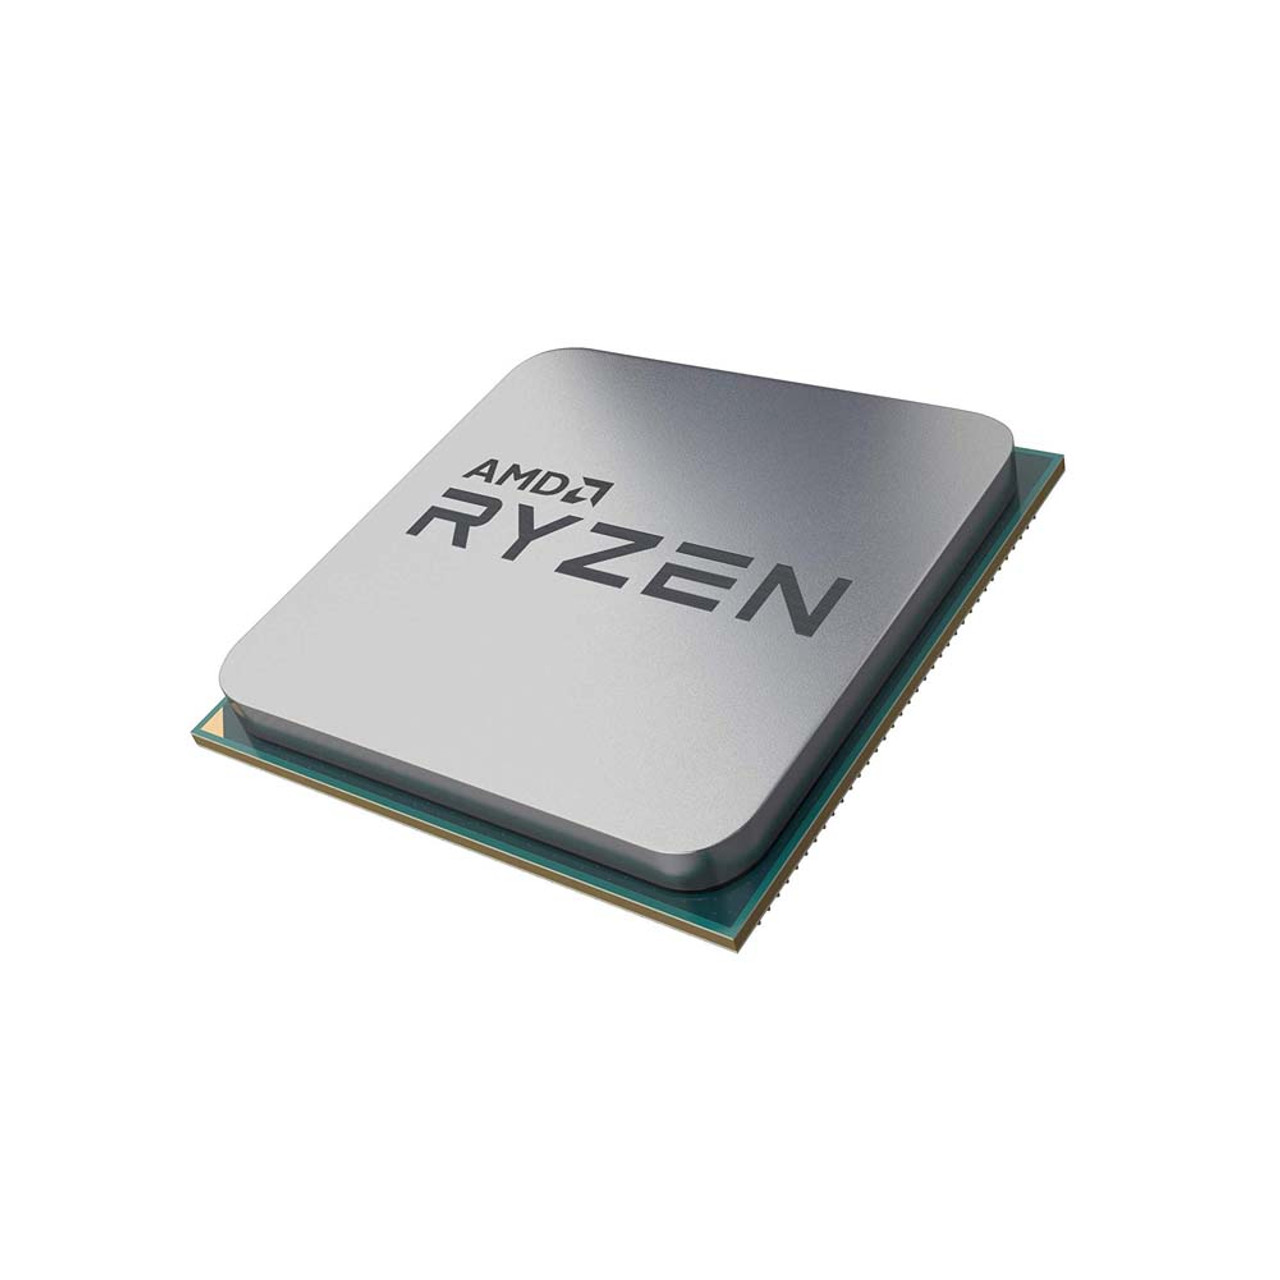 AMD Ryzen 3 3200G - 3.6GHz Quad Core (YD3200C5FHBOX) Processor for sale  online